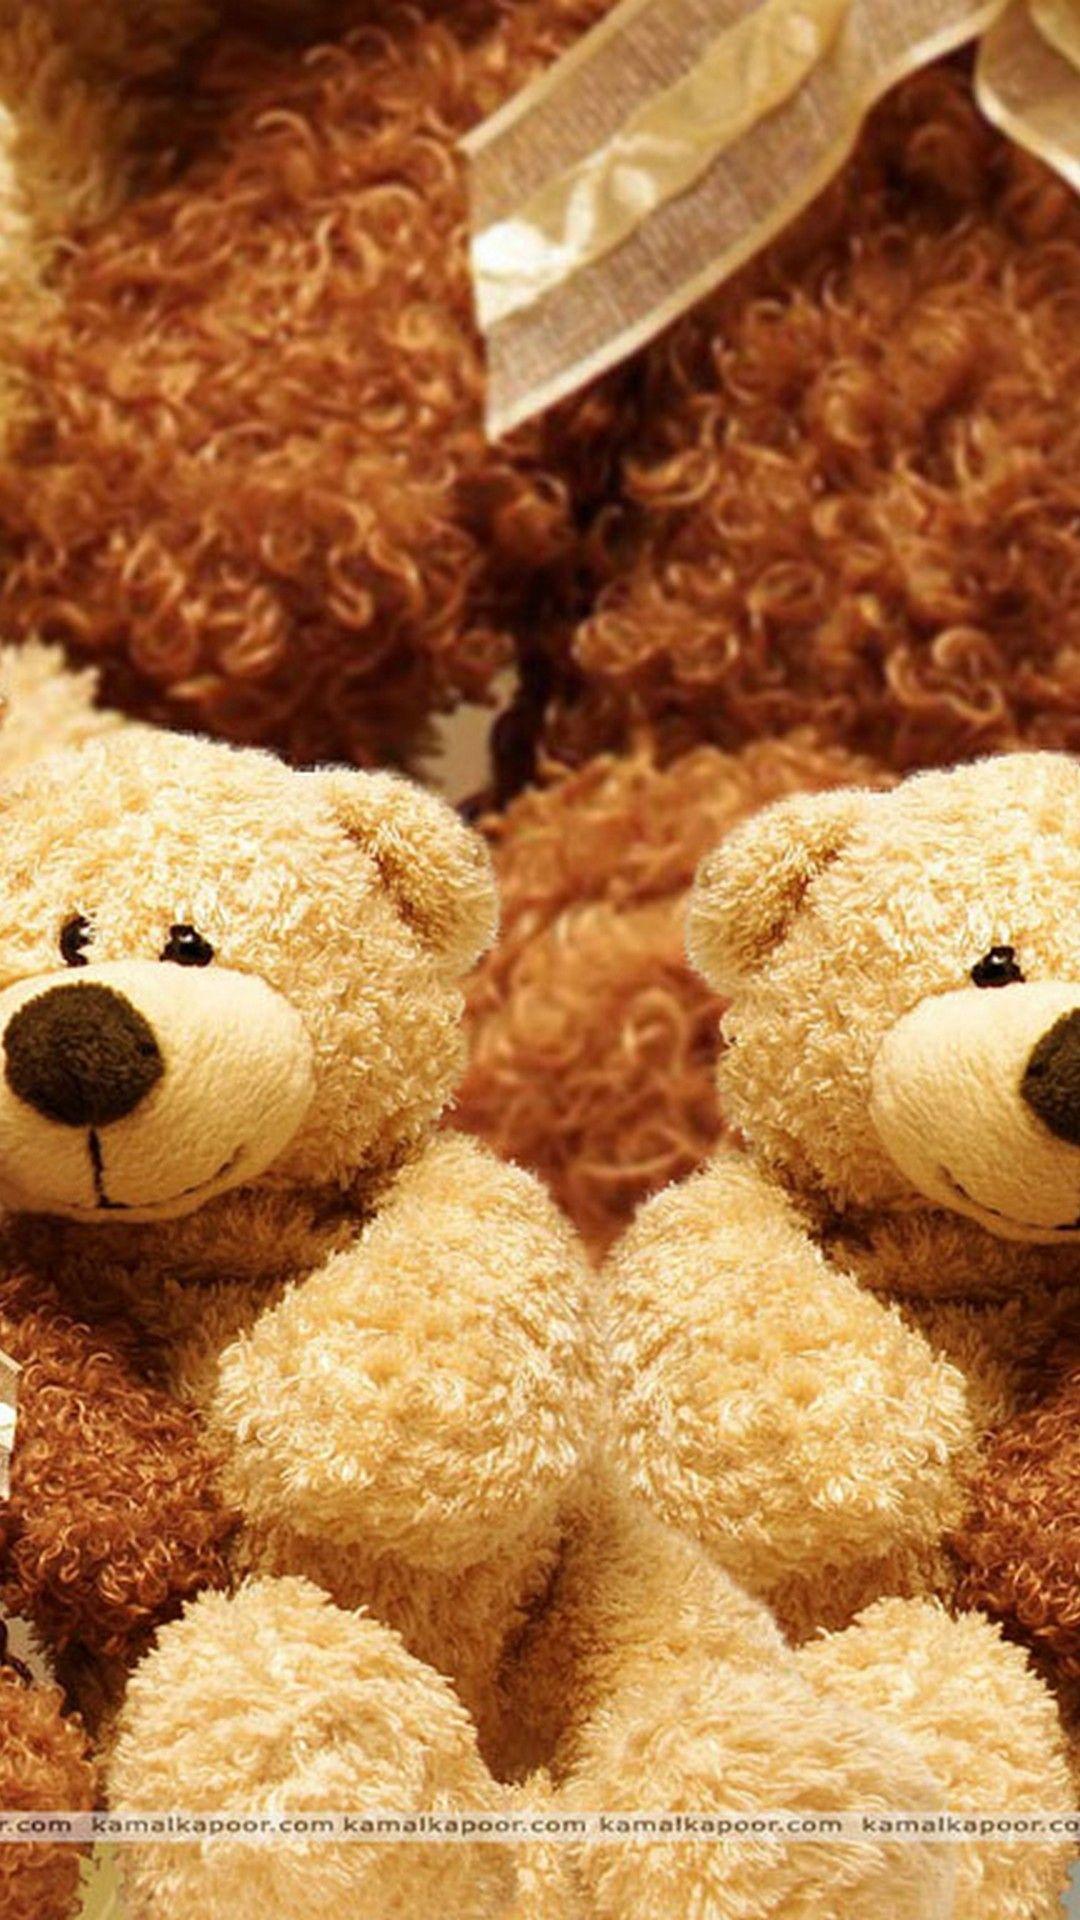 Cute Teddy Bear Aesthetic Wallpapers - Top Free Cute Teddy Bear